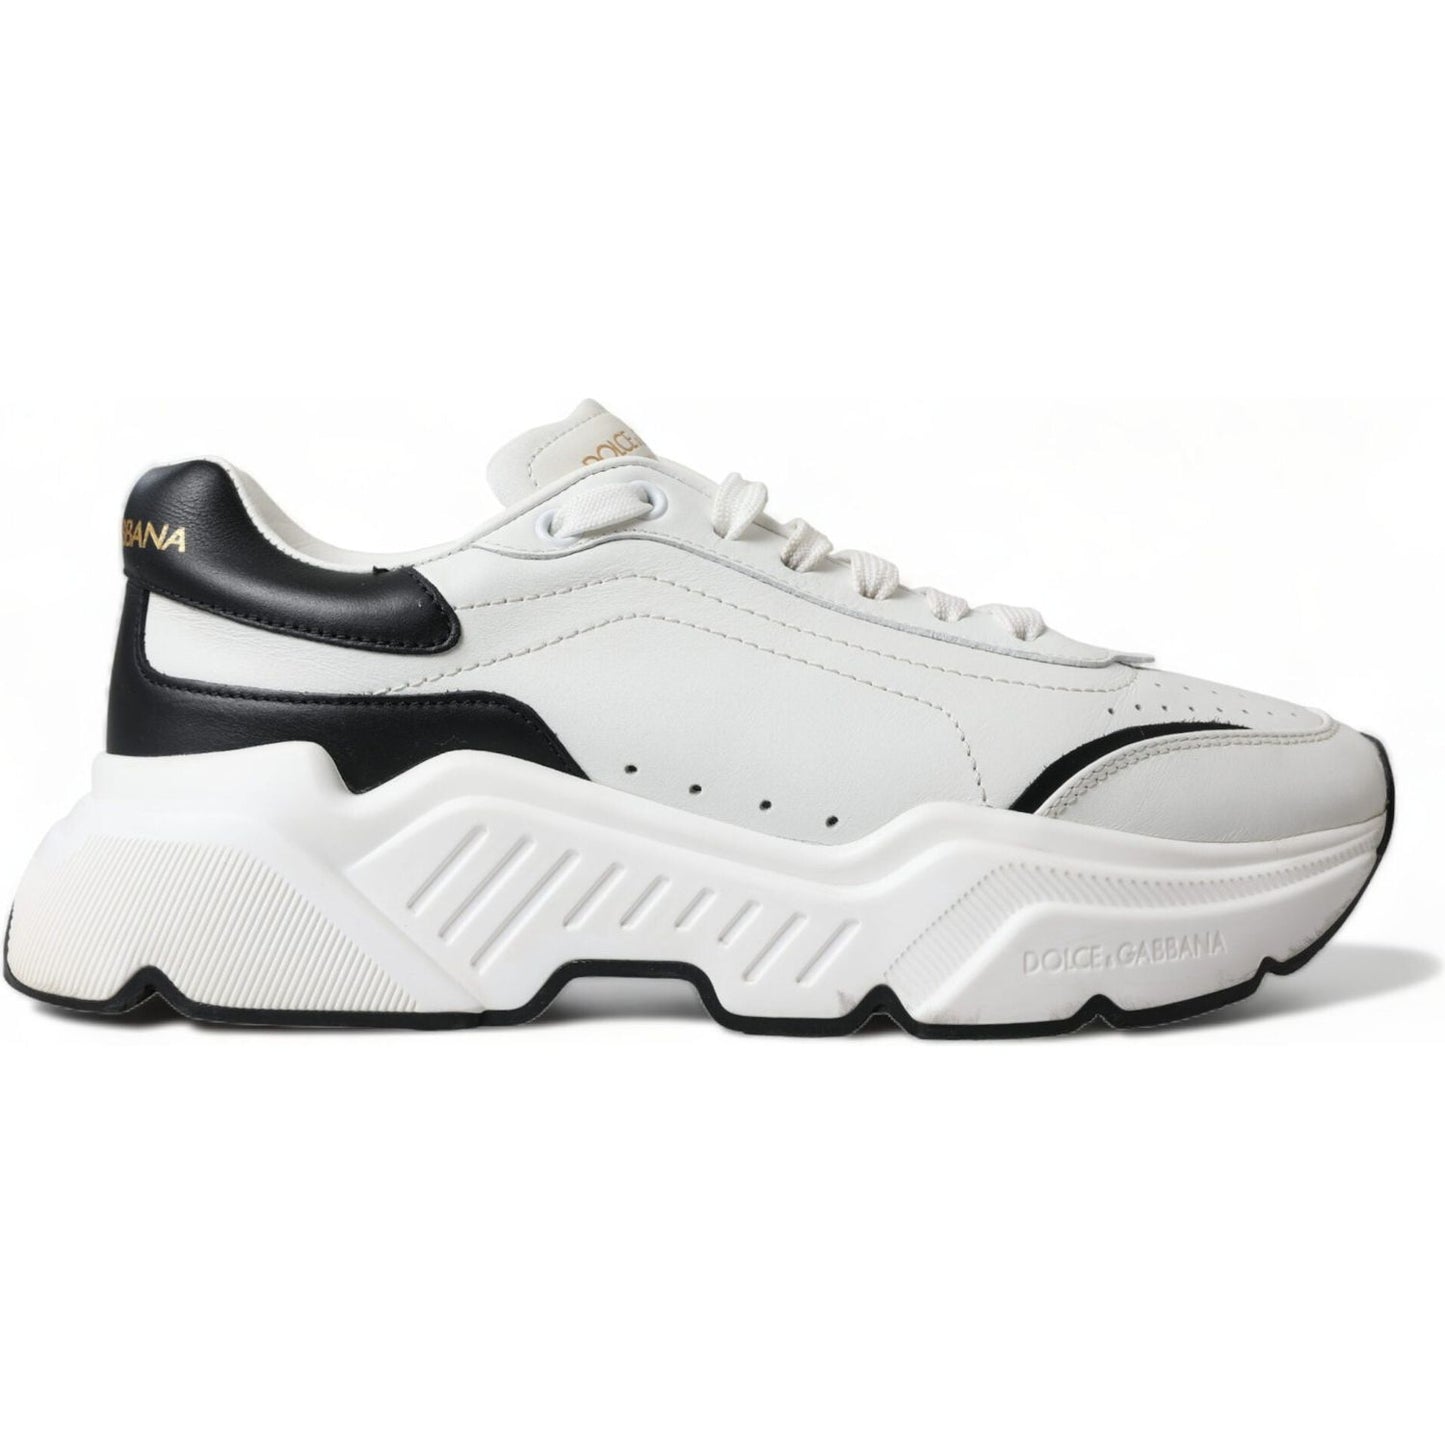 Dolce & Gabbana Chic Black & White Daymaster Leather Sneakers white-black-low-top-daymaster-sneakers-shoes-1